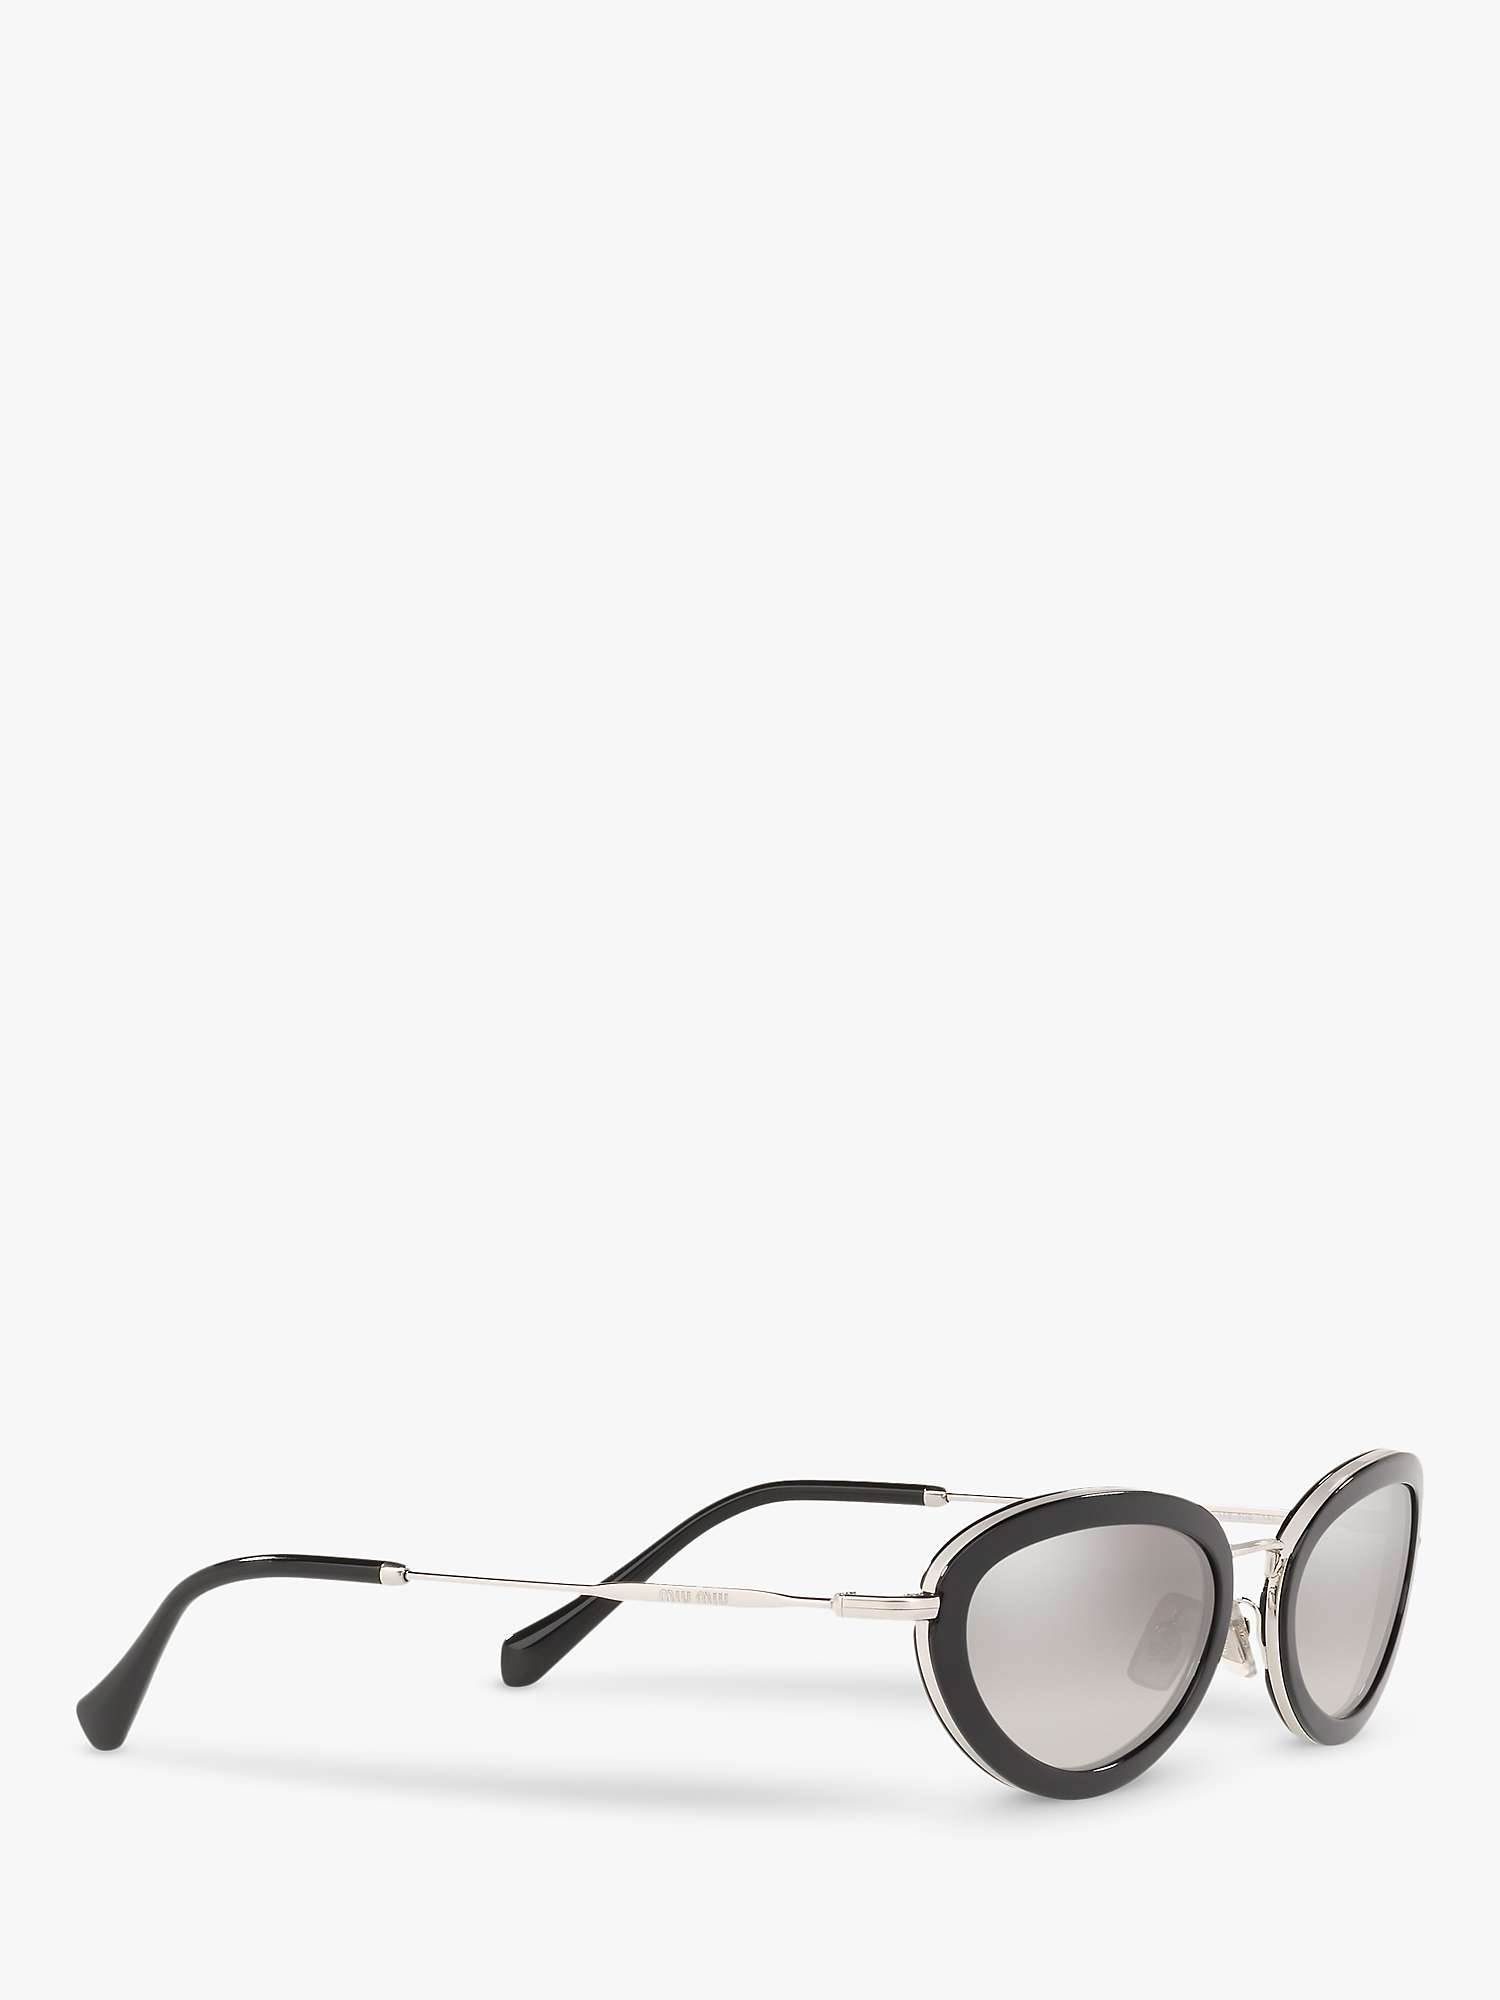 Buy Miu Miu MU 58US Women's Oval Sunglasses, Black/Mirror Grey Online at johnlewis.com